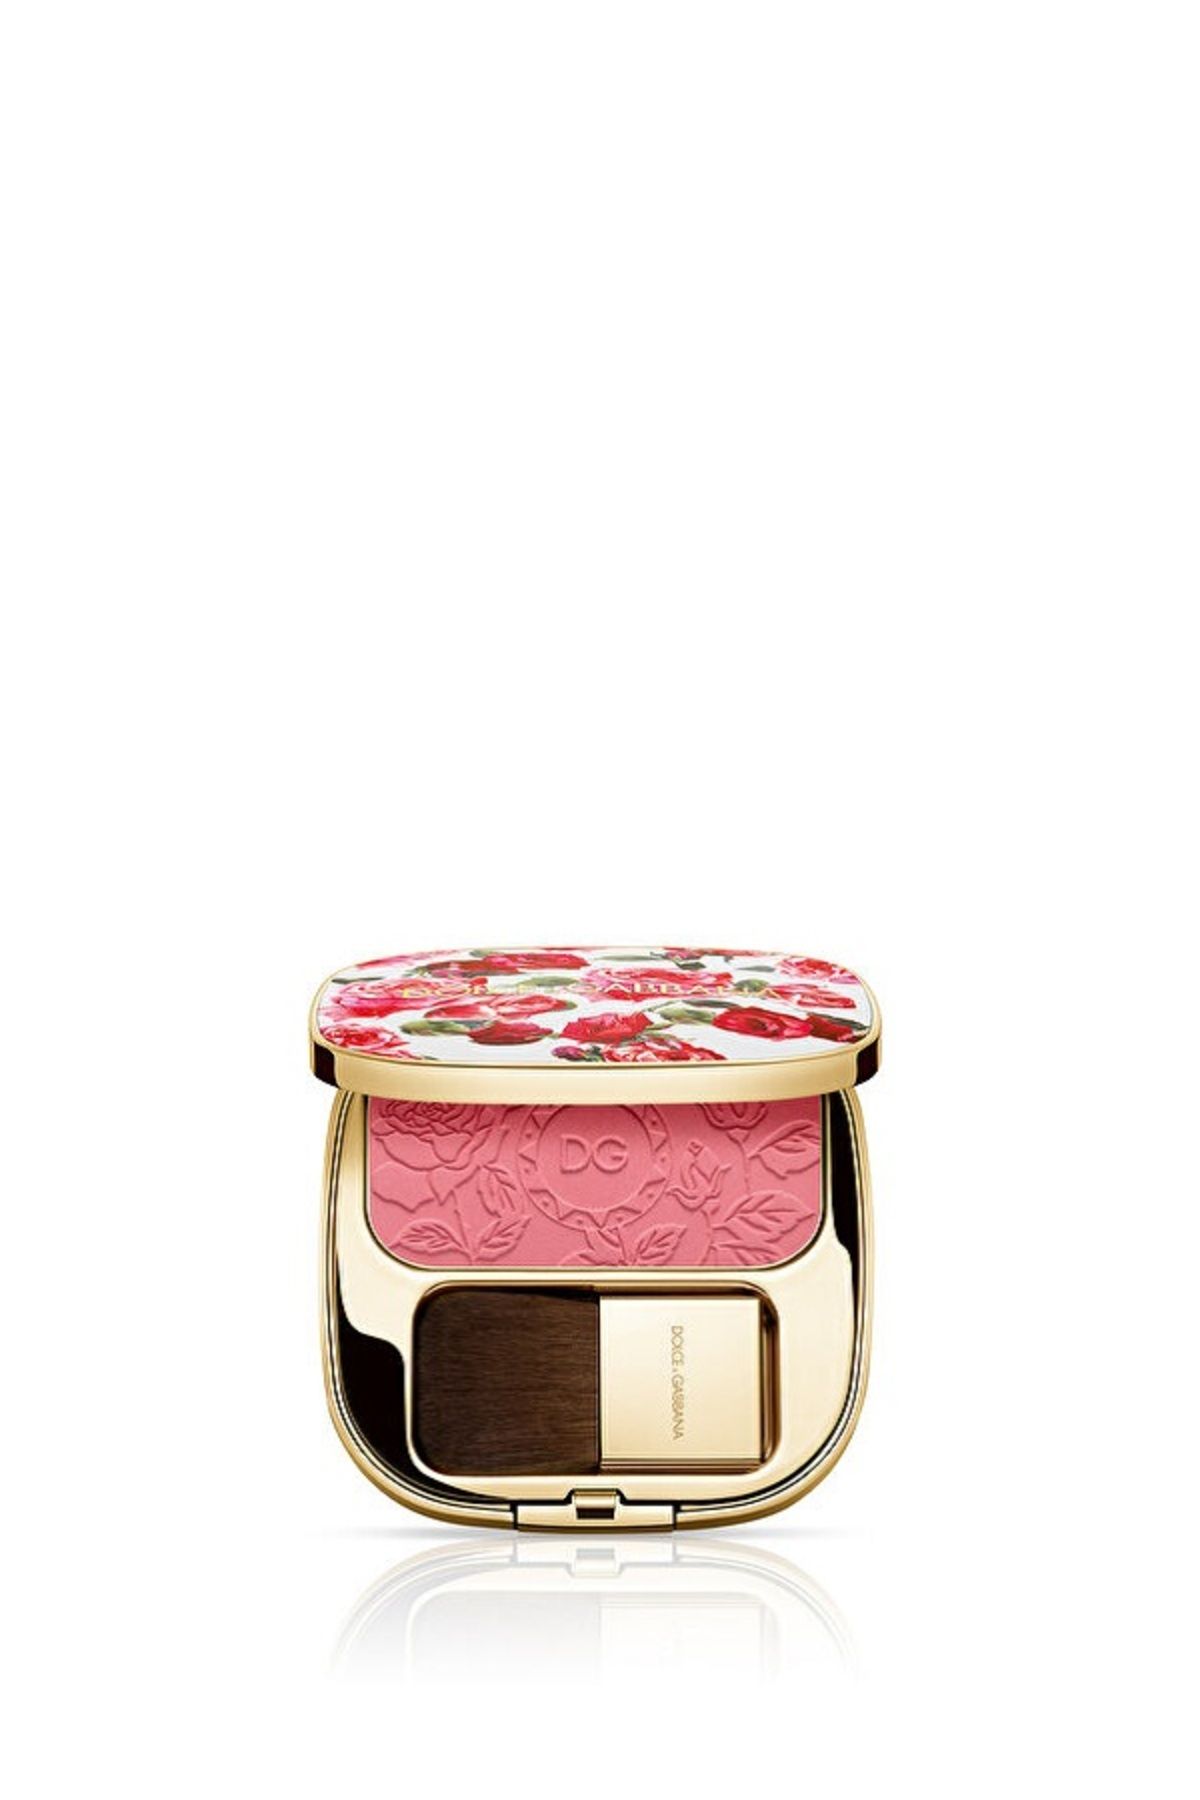 Dolce&Gabbana Blush Of Roses Powder Provocatıve 200 5G